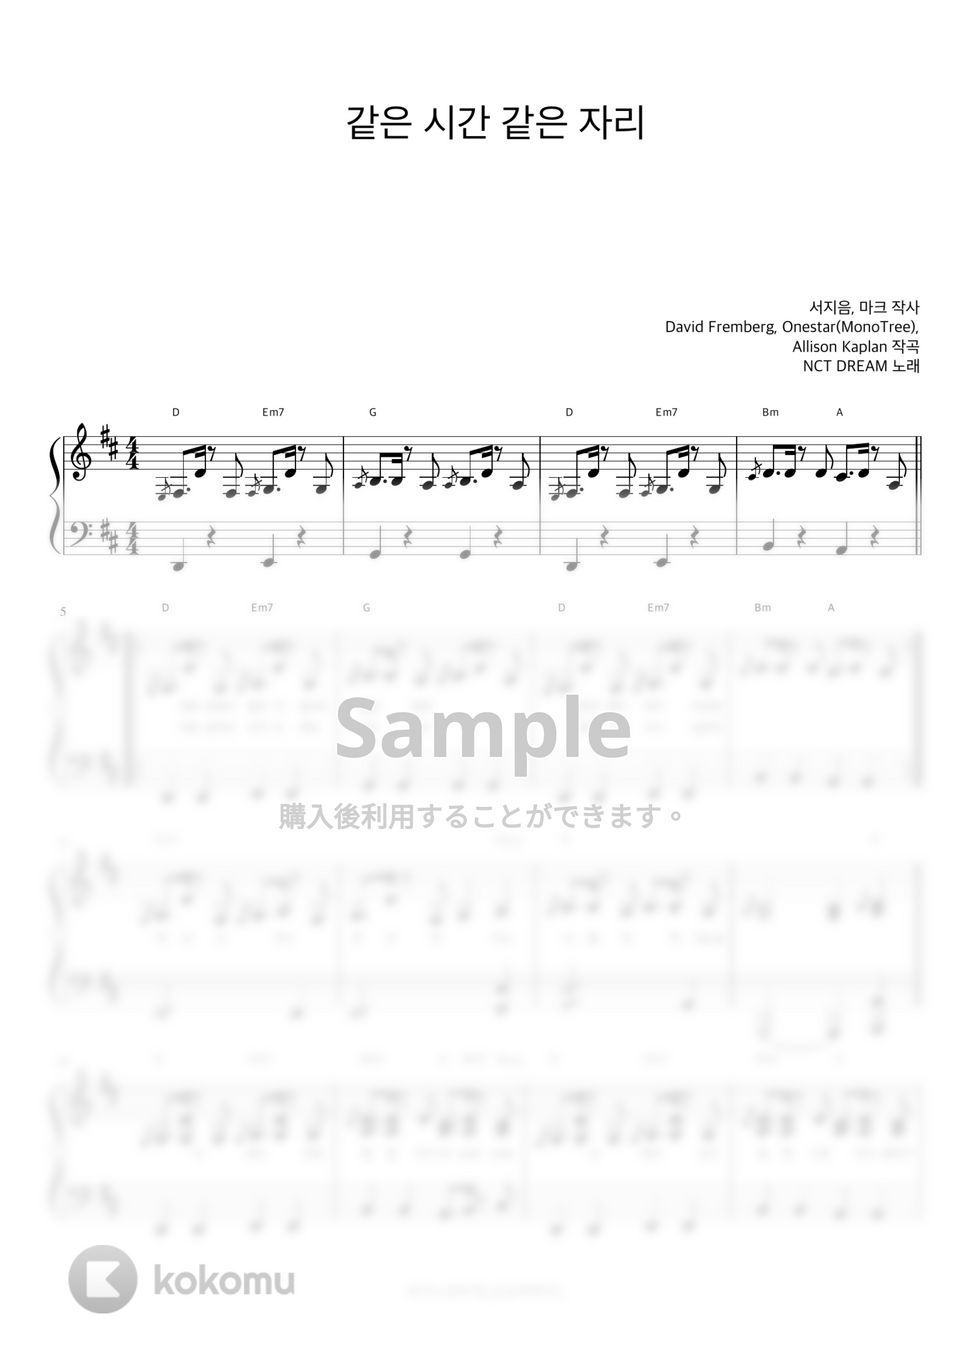 NCT DREAM - Walk you home (伴奏楽譜) by 피아노정류장